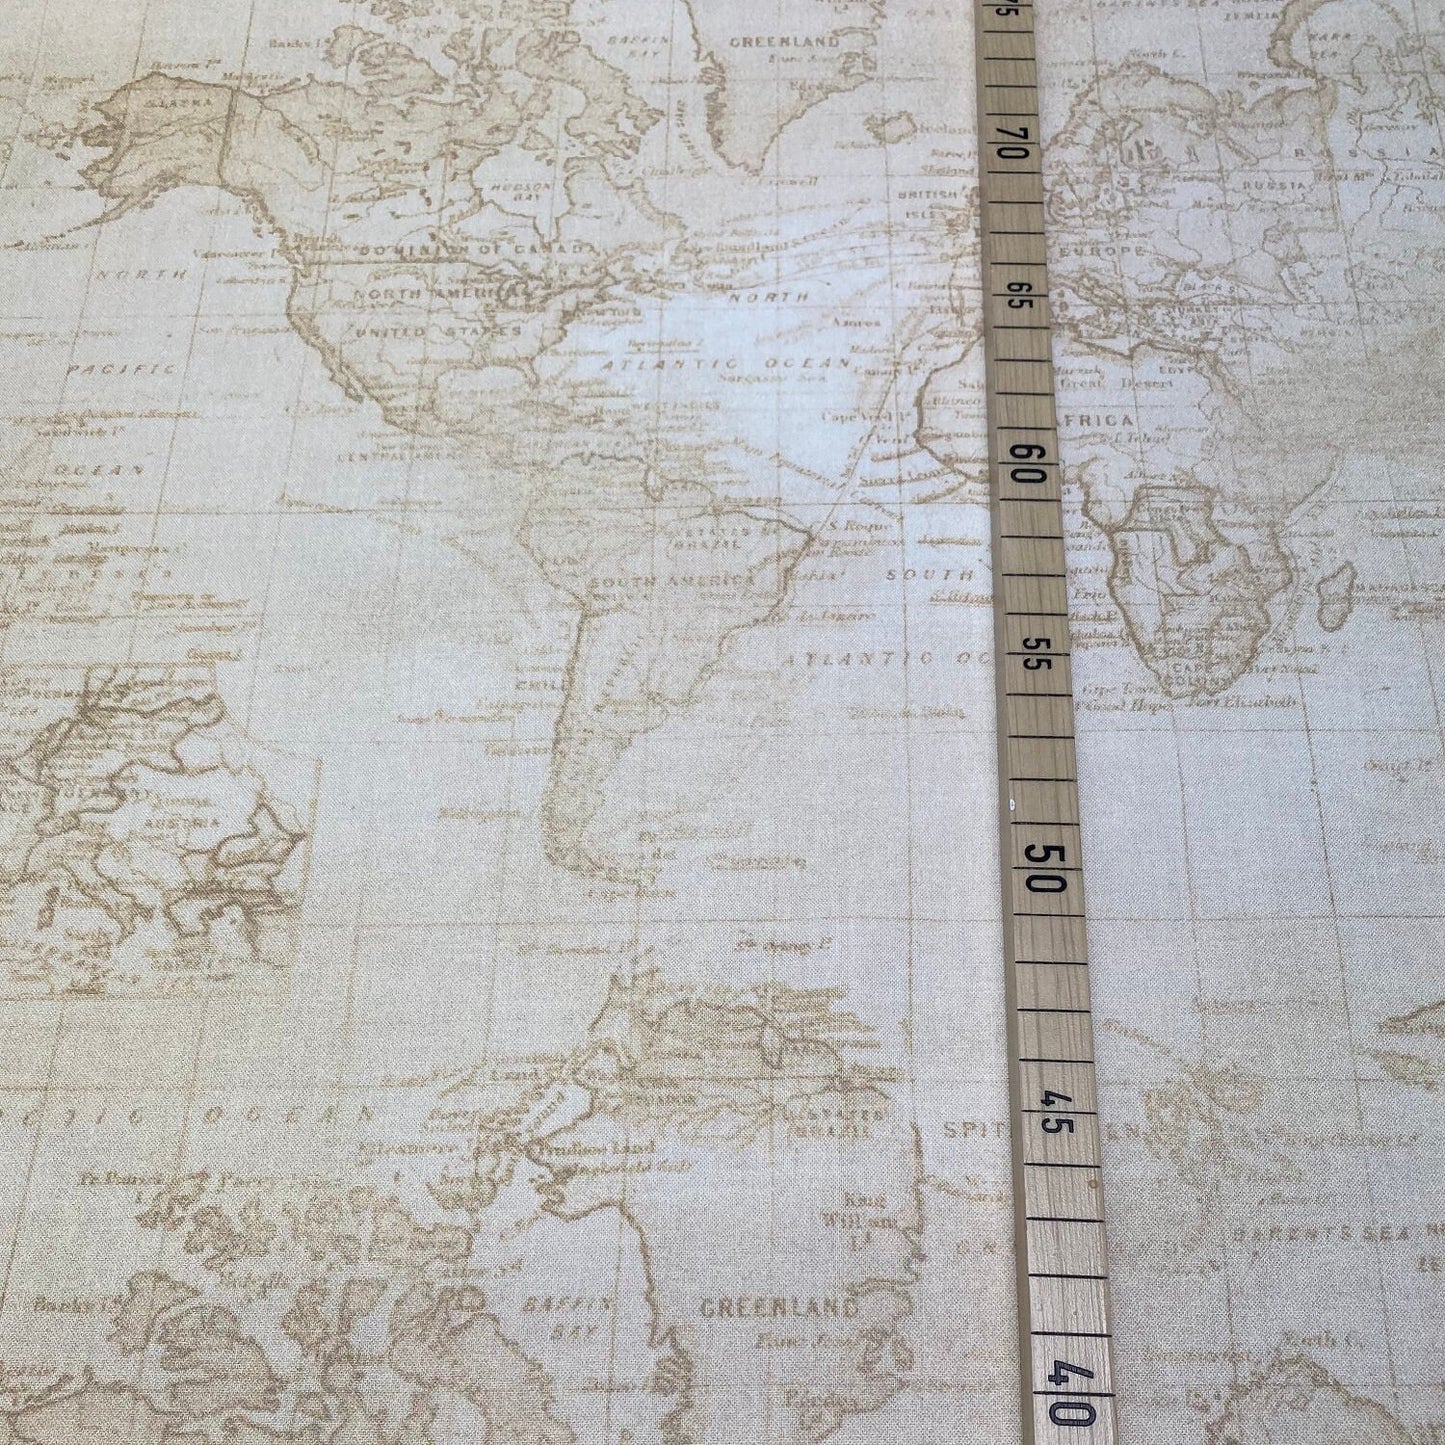 Michael Miller Sea Navigation Landkarte Welt Geografisch Weltkarte